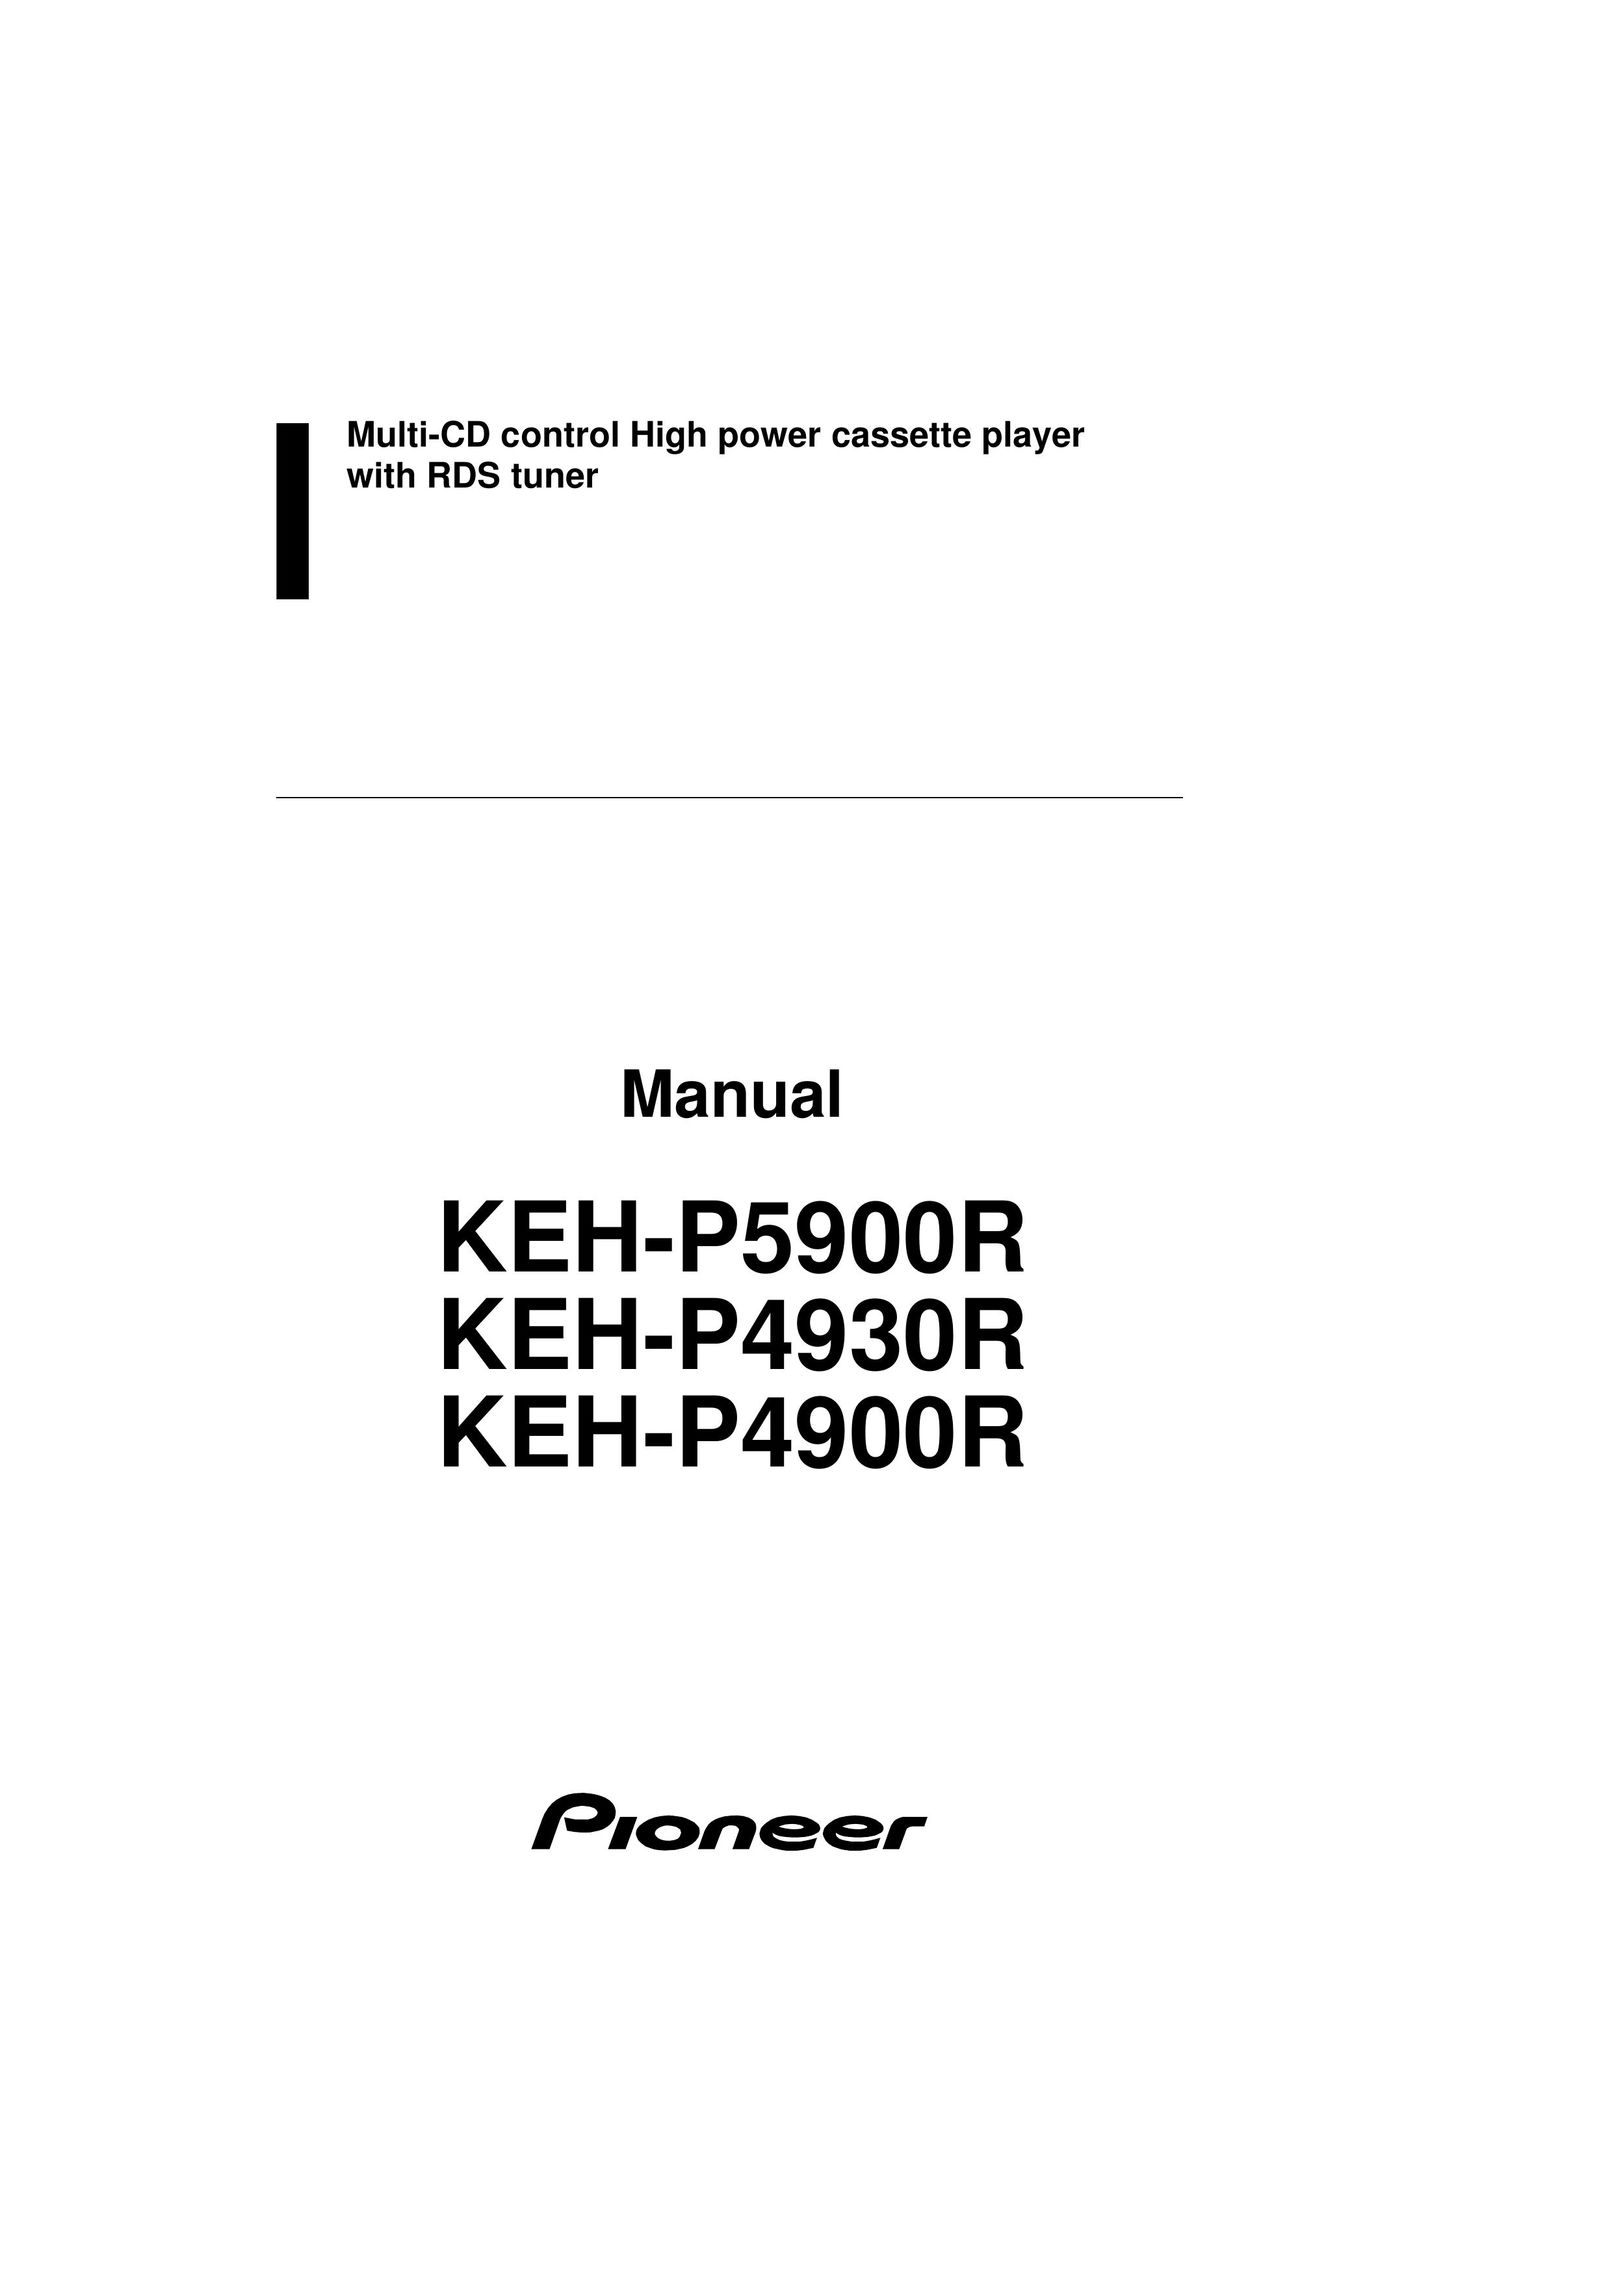 Pioneer KEH-P5900R Cassette Player User Manual